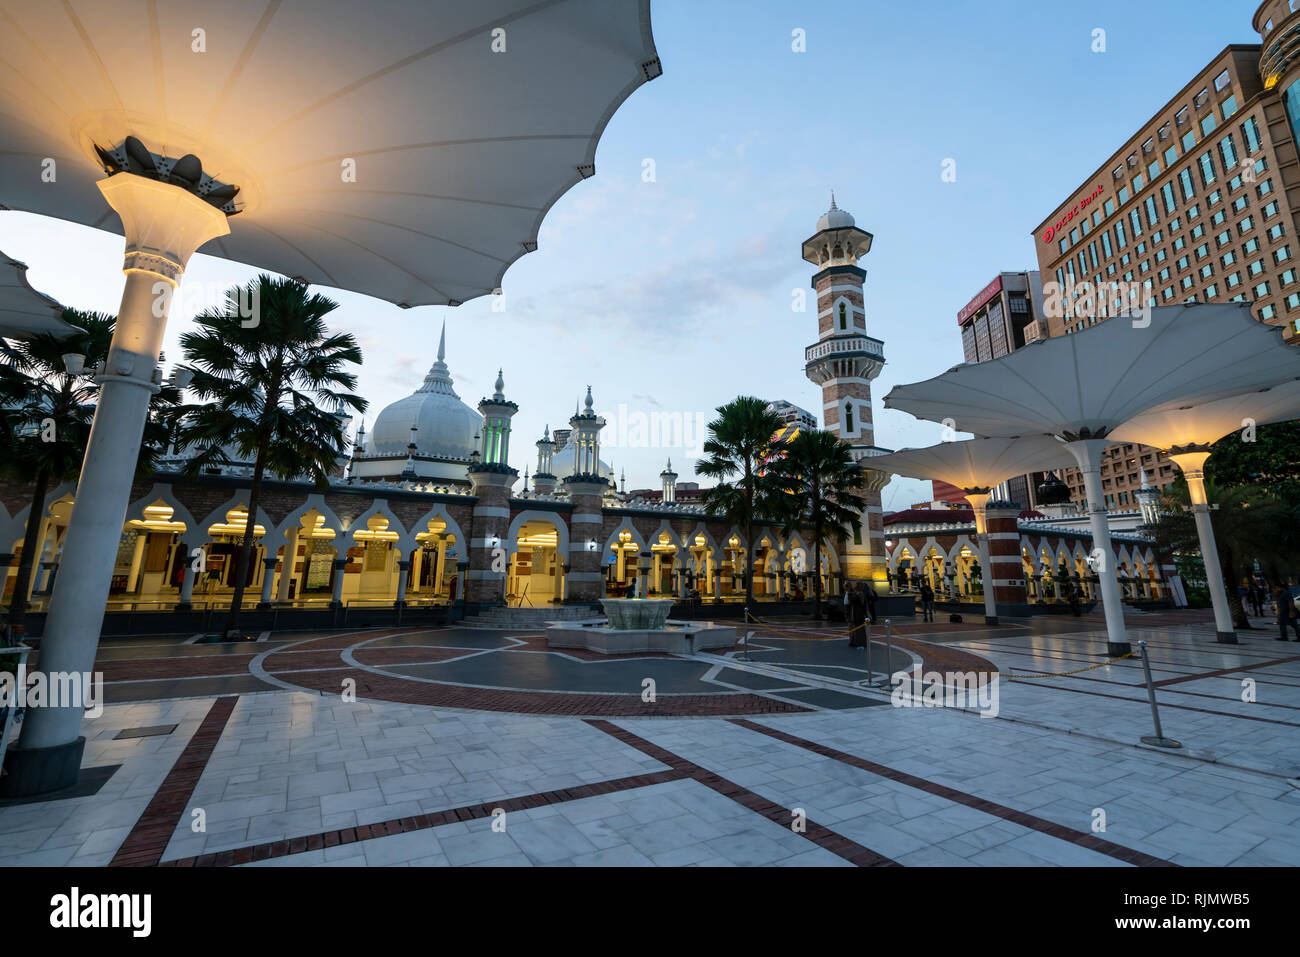 A view of Masjid Jamek mosque at sunset in Kuala Lumpur, Malaysia Stock Photo